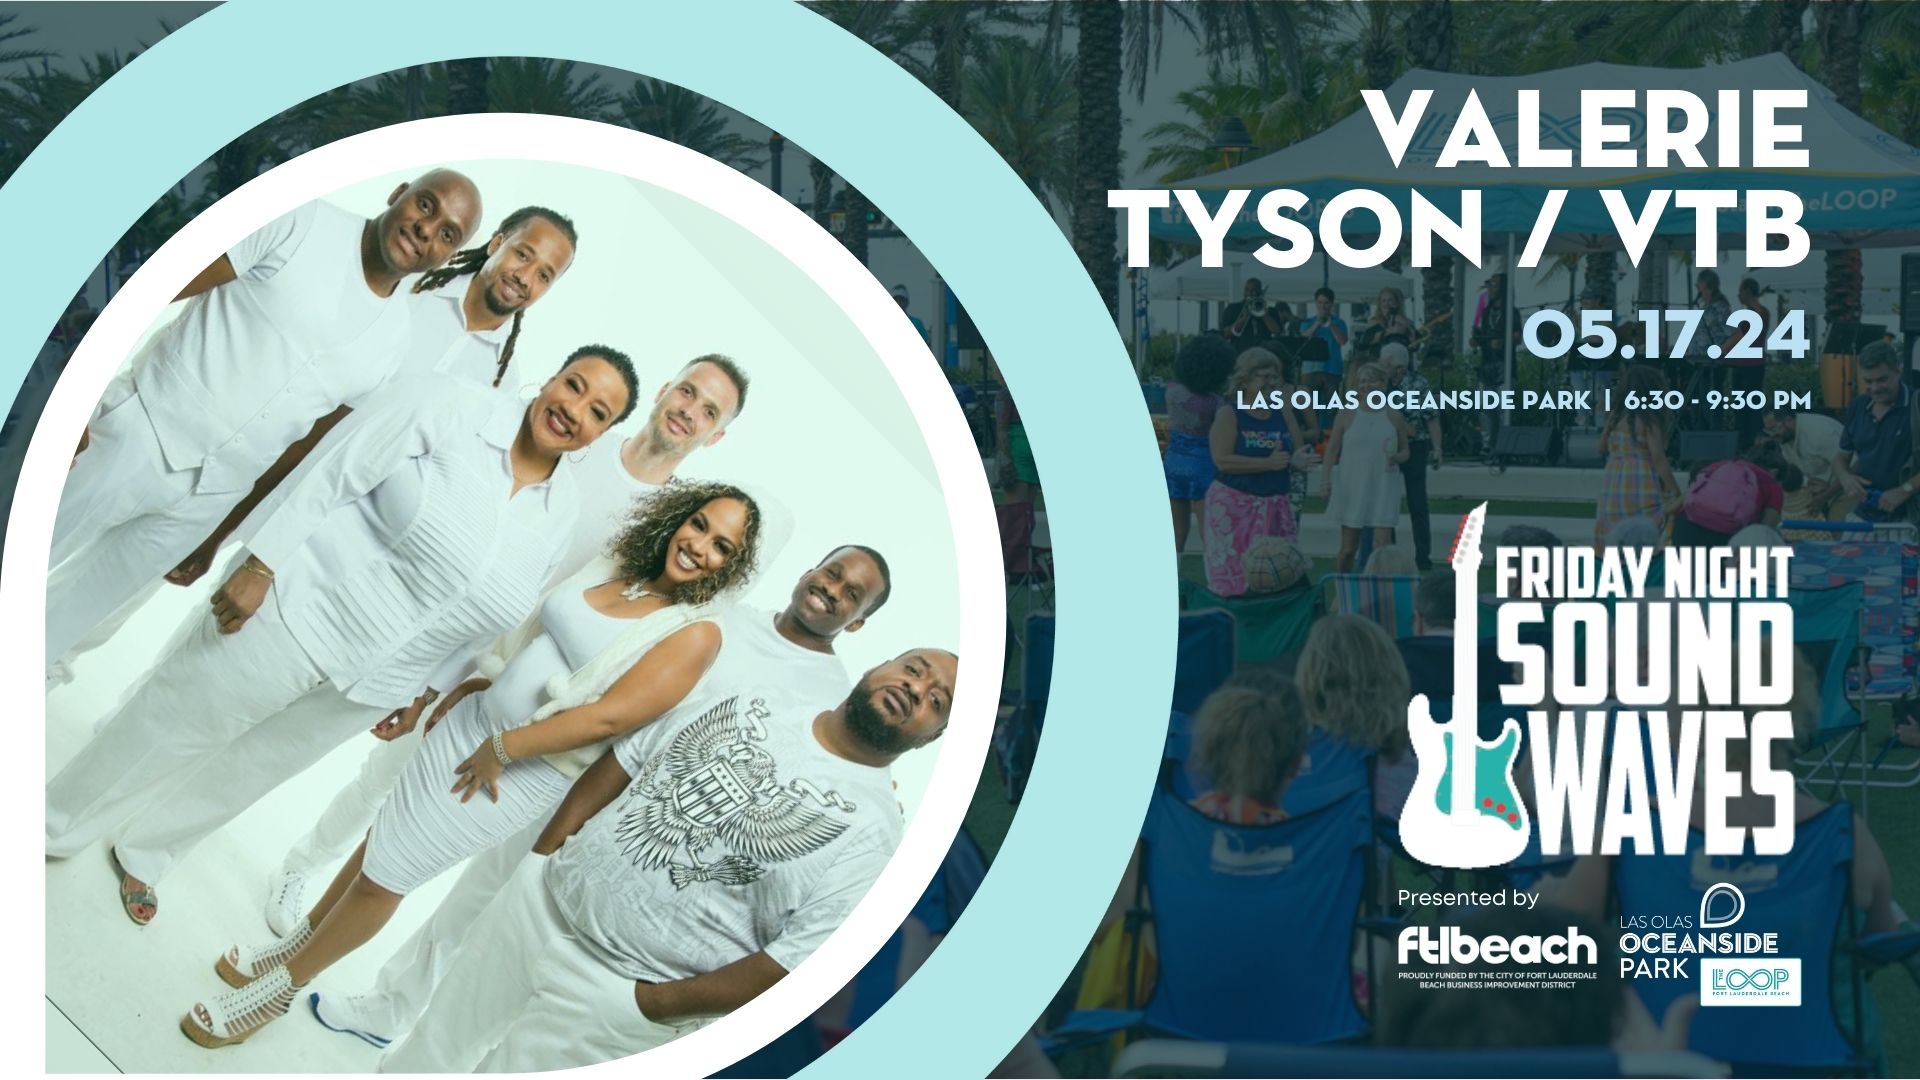 Valerie Tyson Band